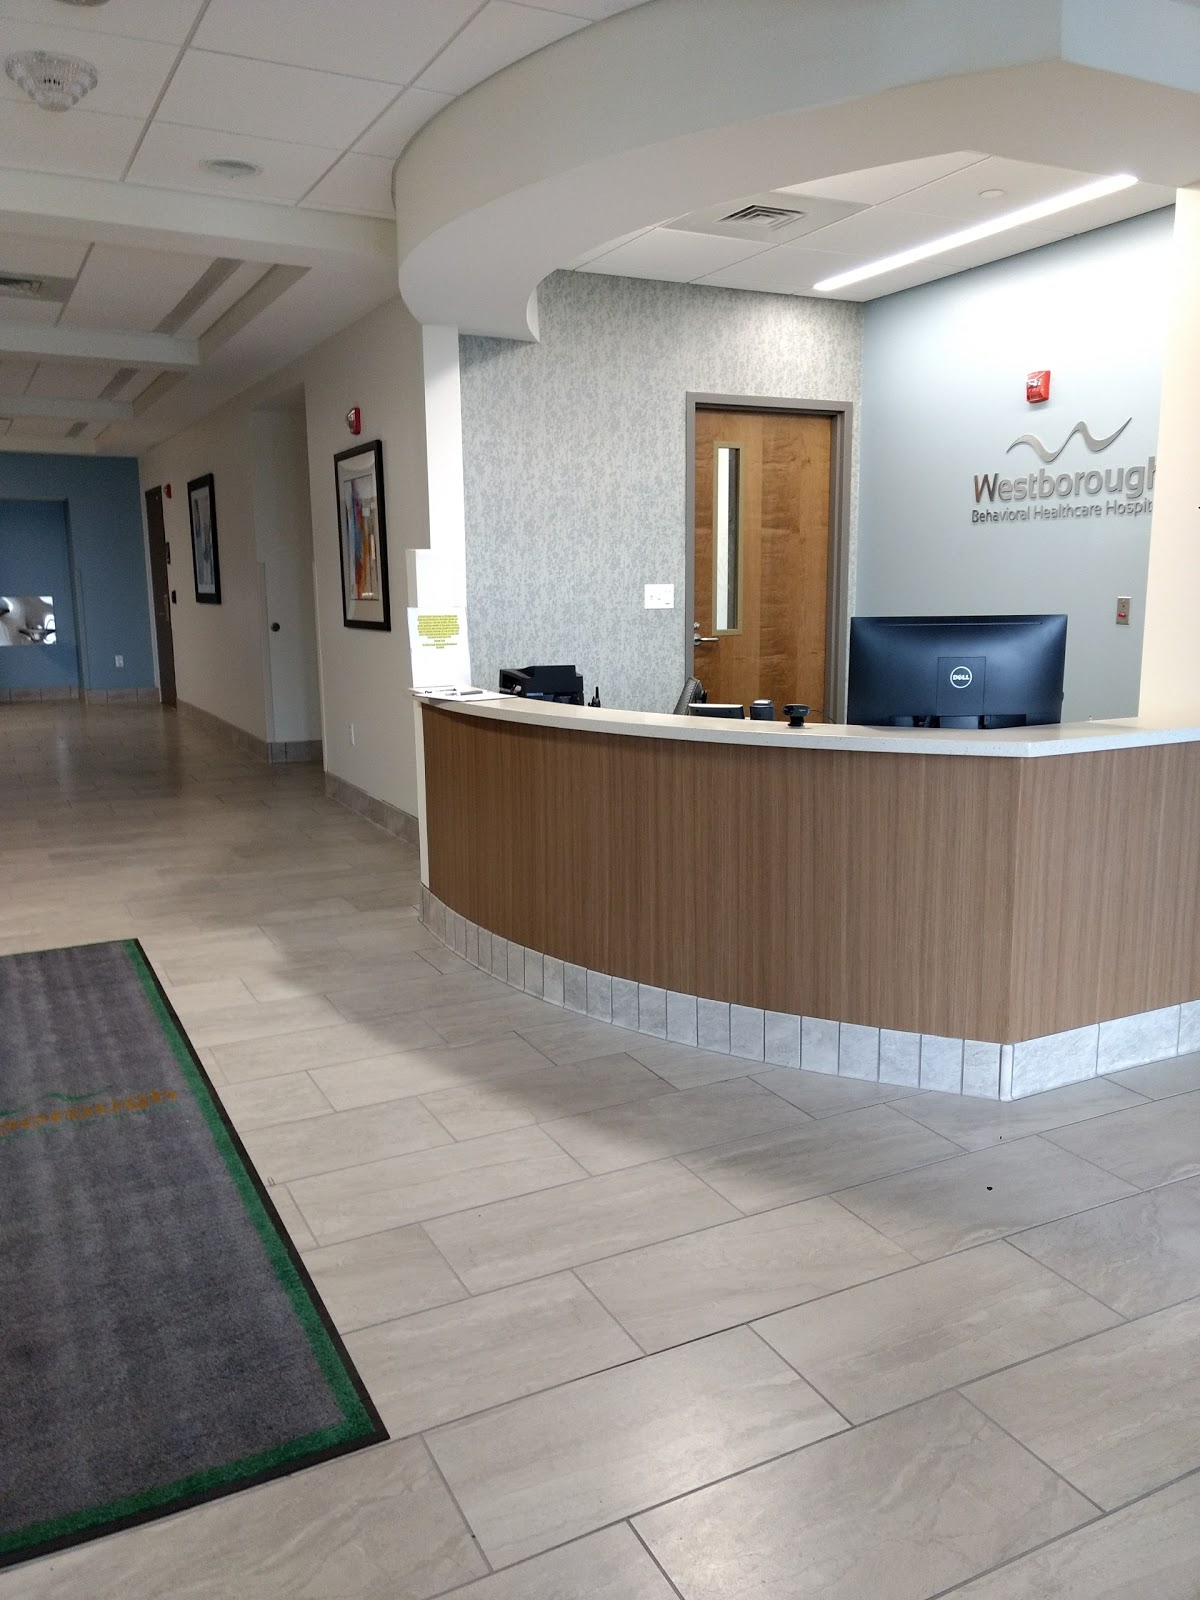 Westborough Behavioral Healthcare Hospital